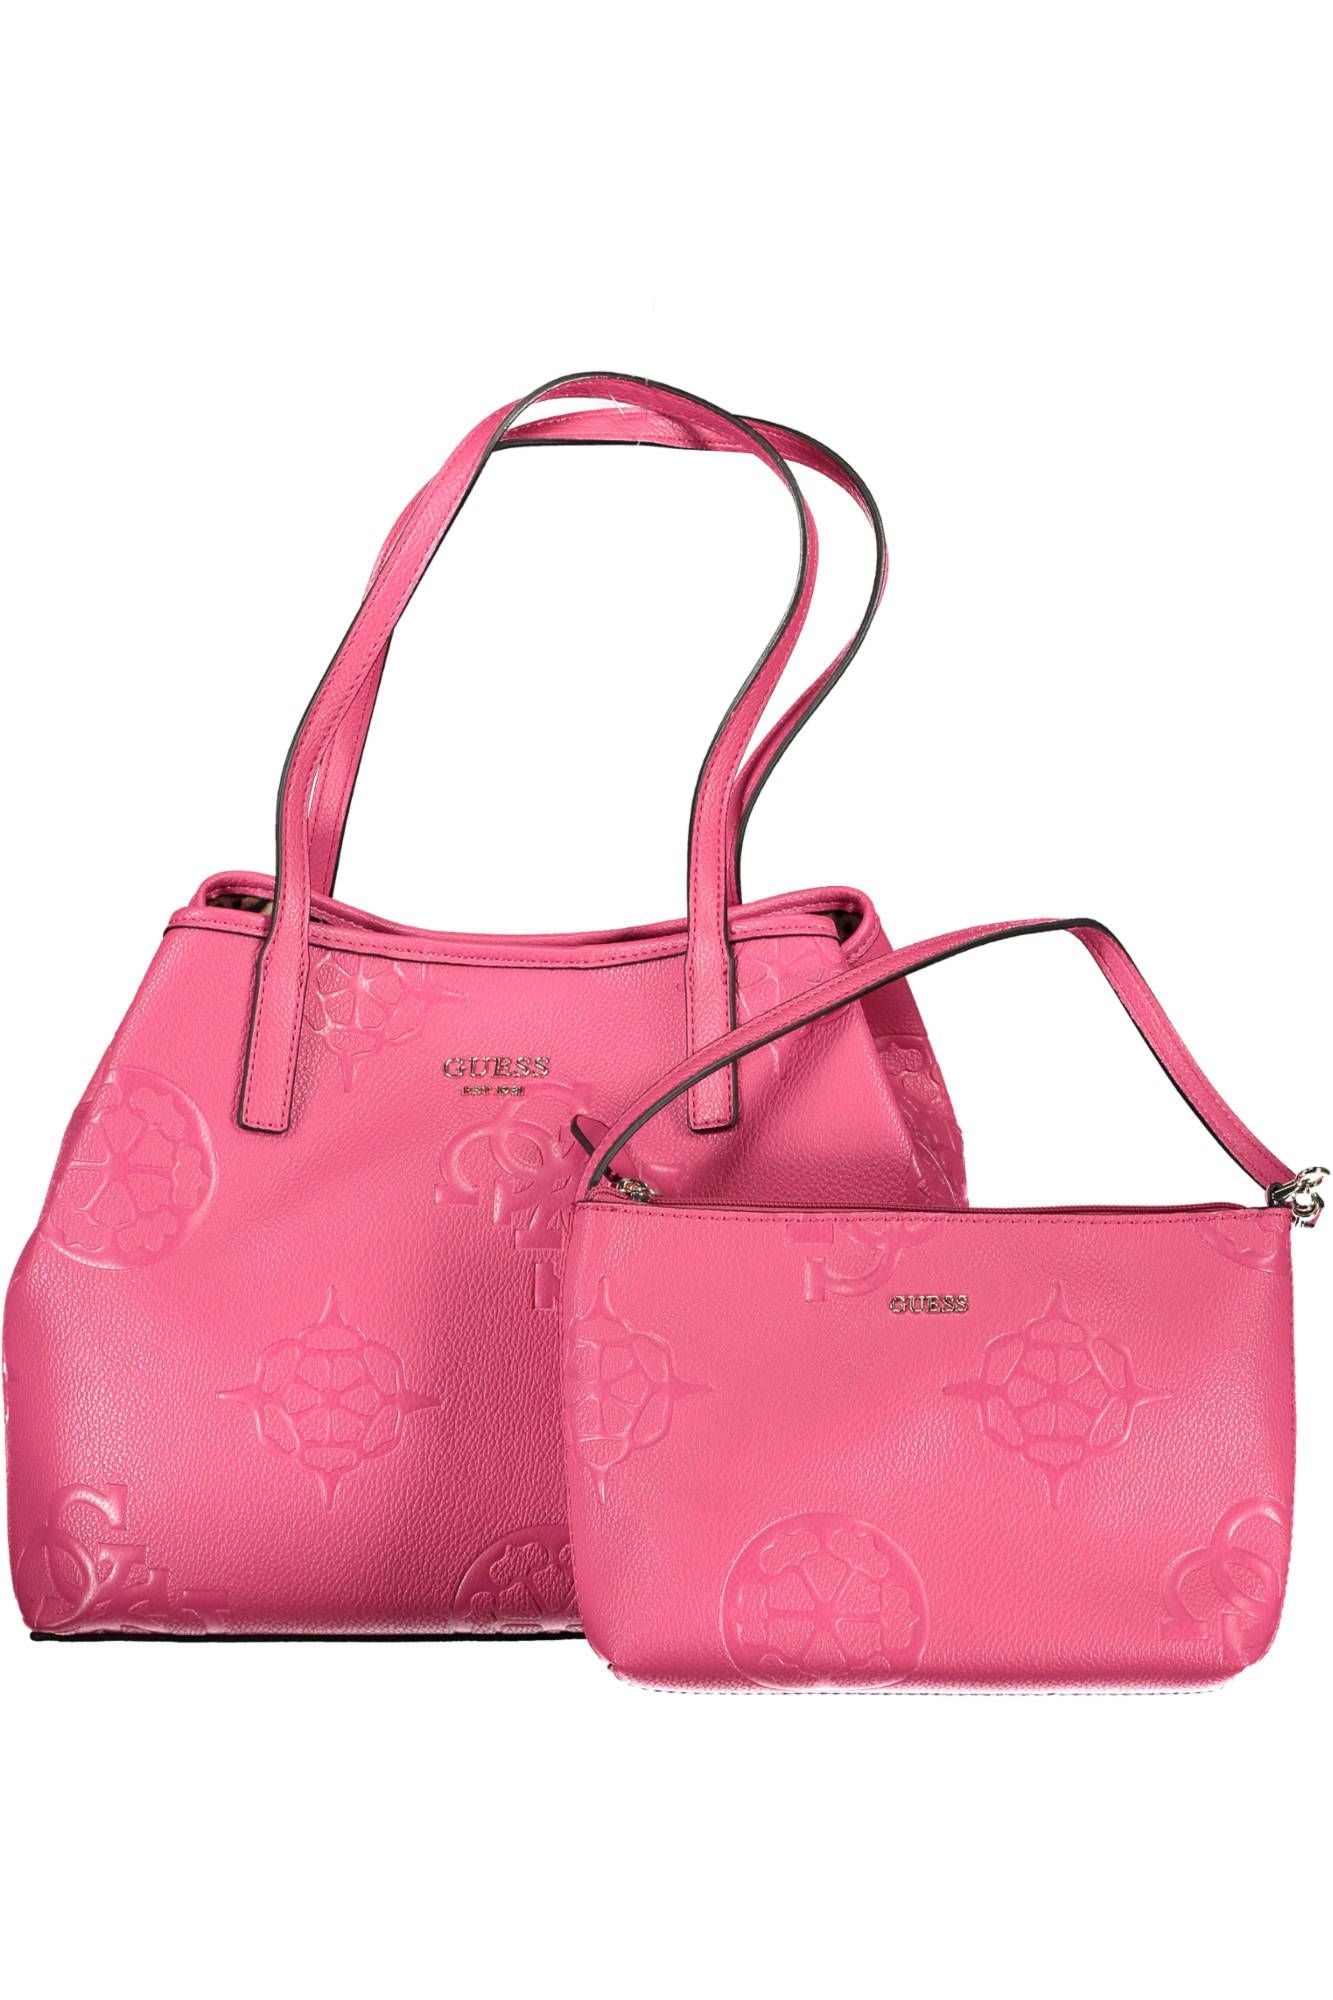 Guess Jeans Pink Polyurethane Handbag